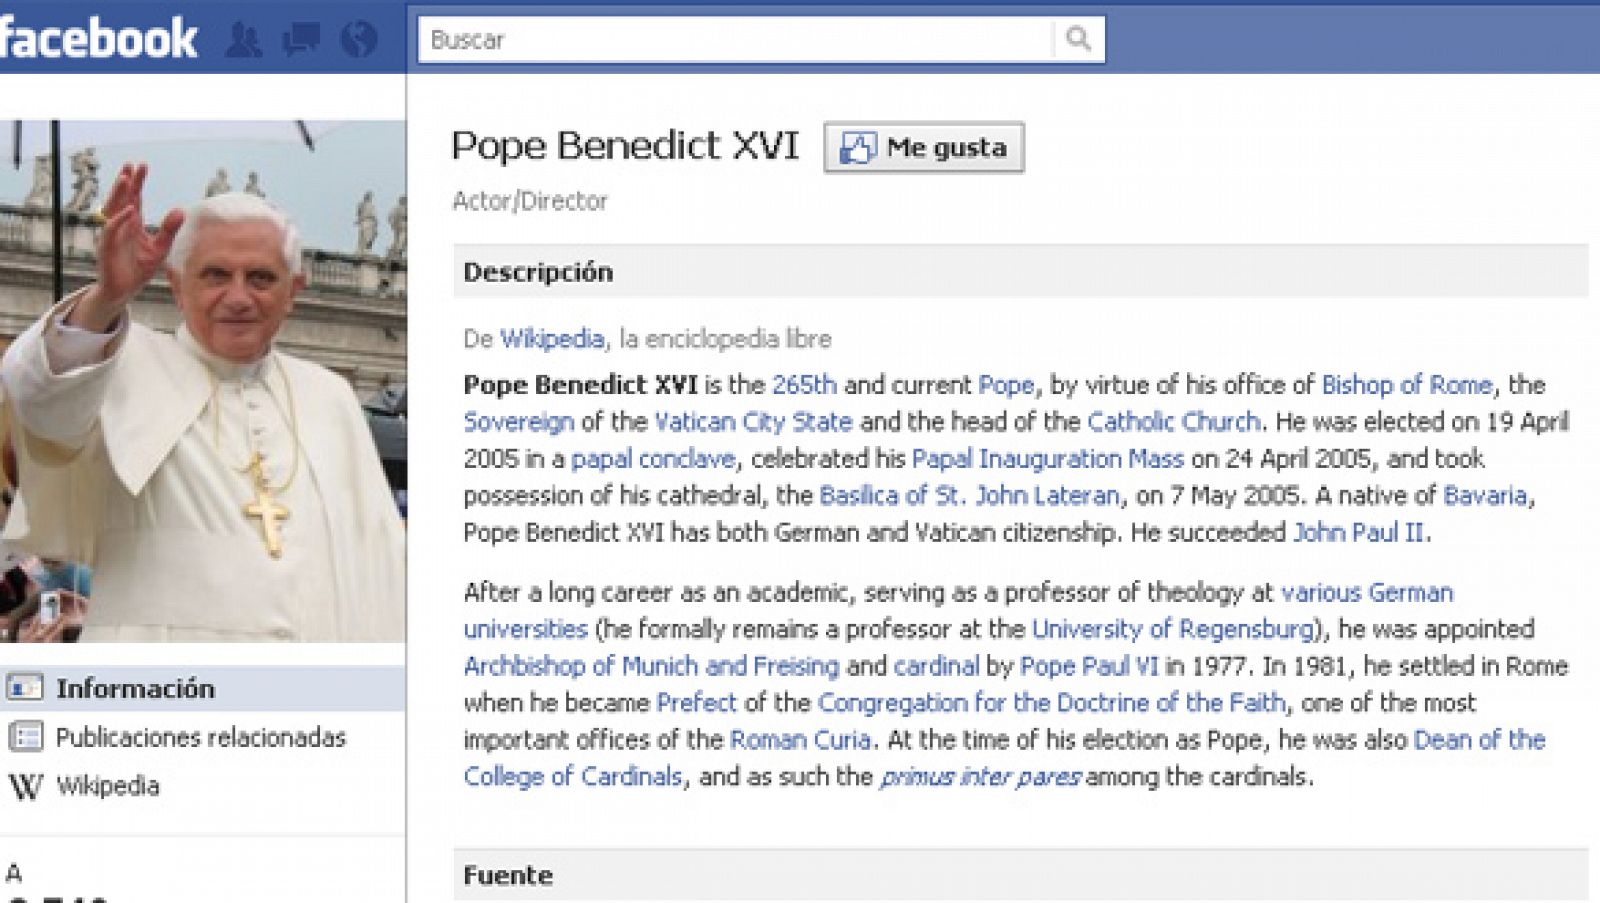 Imagen del perfil de Facebook del Papa.